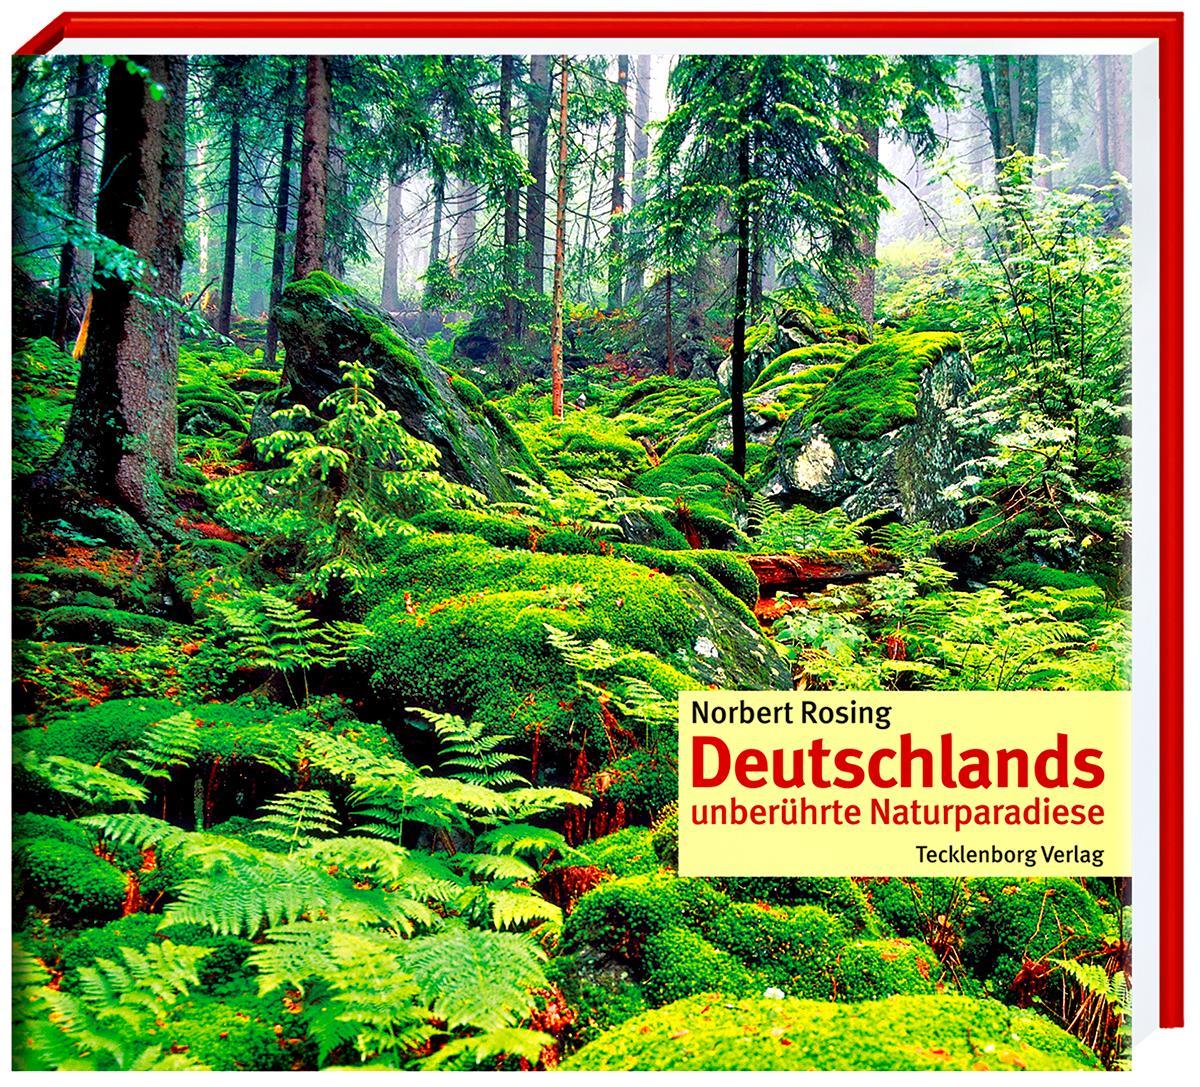 Deutschlands unberührte Naturparadiese, Norbert Rosing - Picture 1 of 1